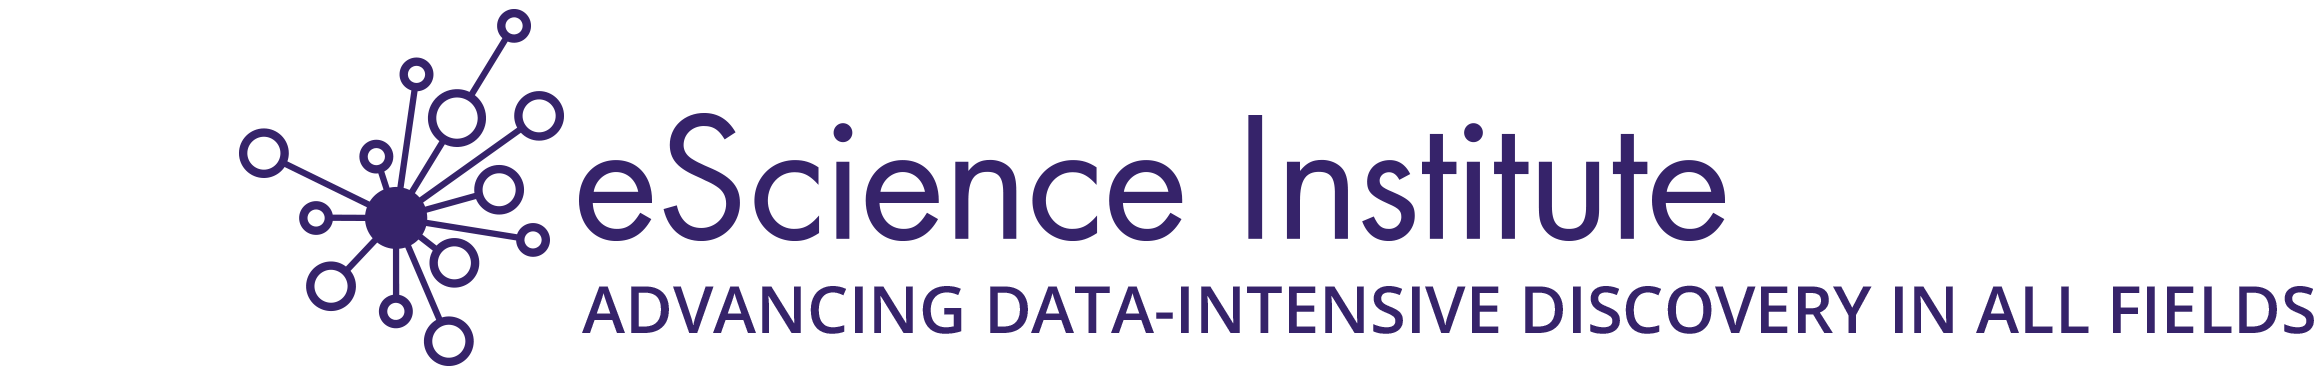 eScience_Logo_HR.png